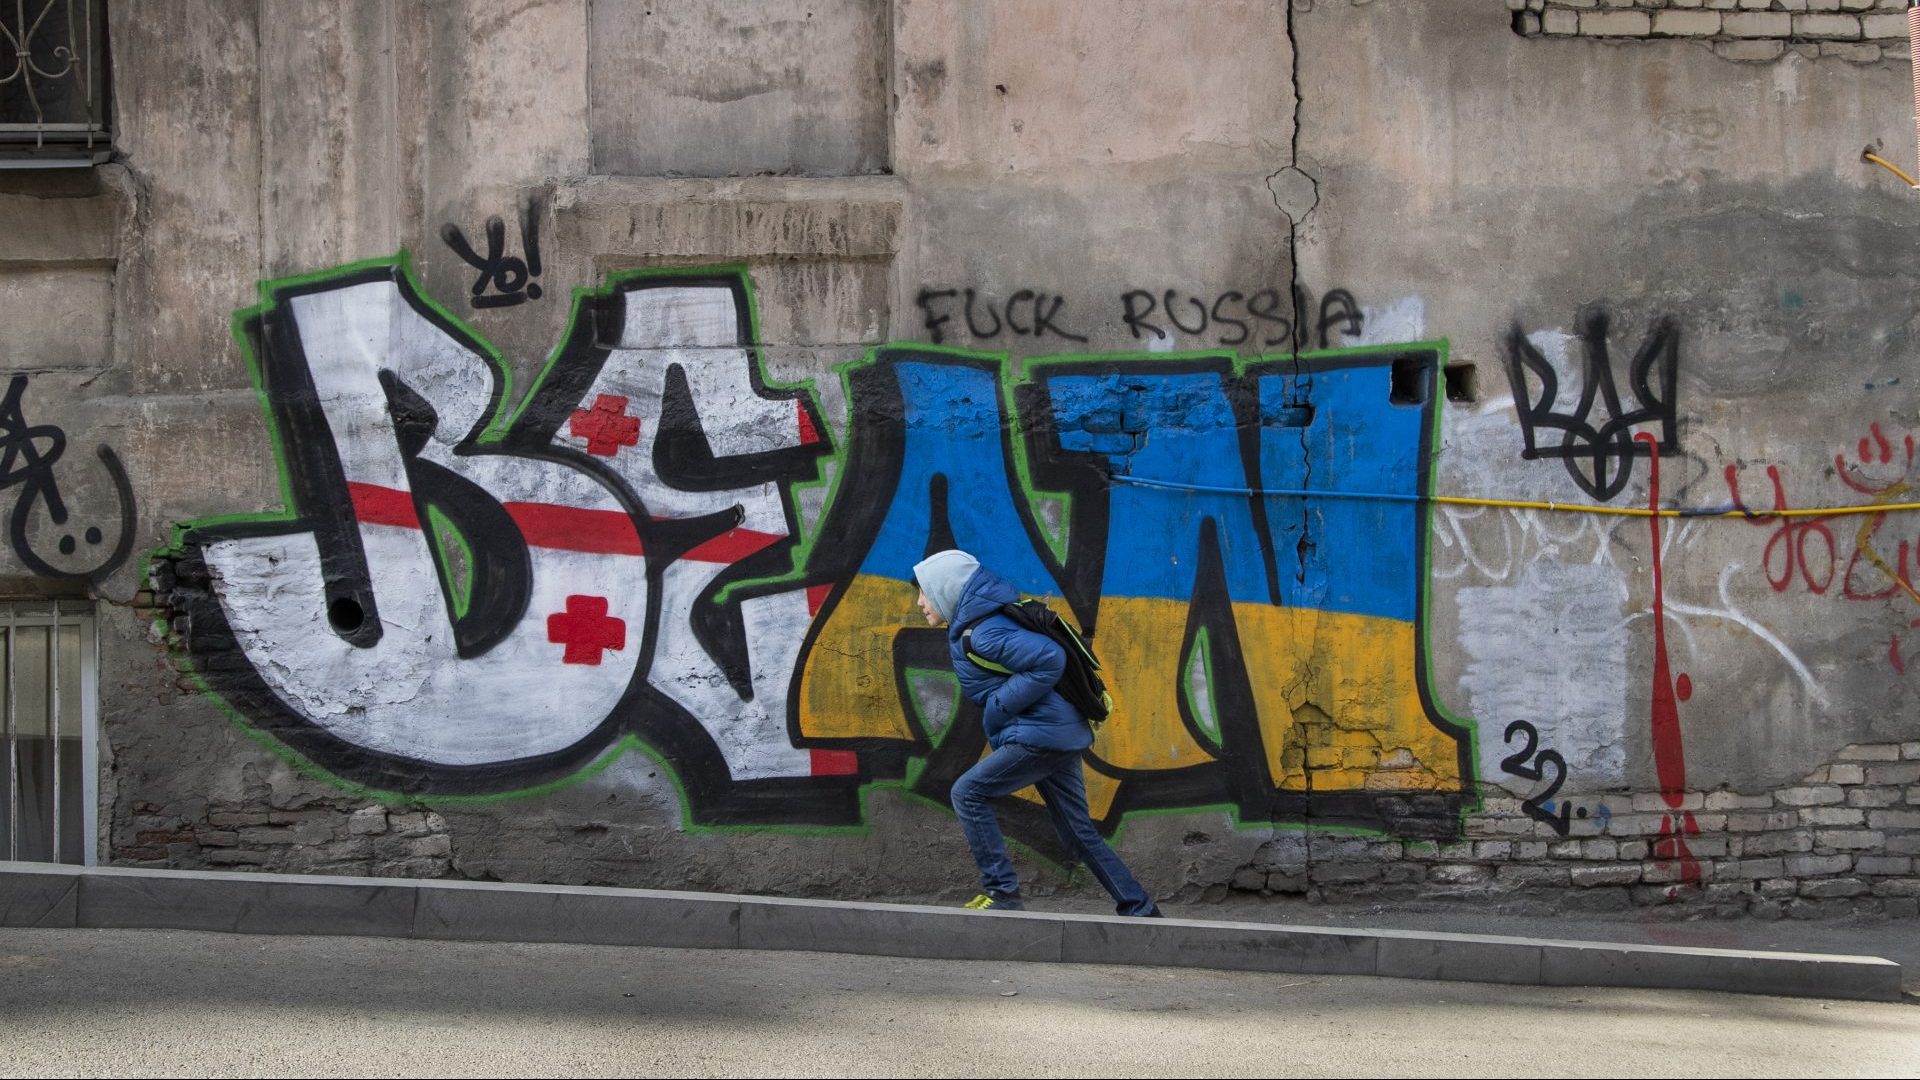 Anti-Russian graffit on the streets of Tbilisi. Photo: Daro Sulakauri/Getty